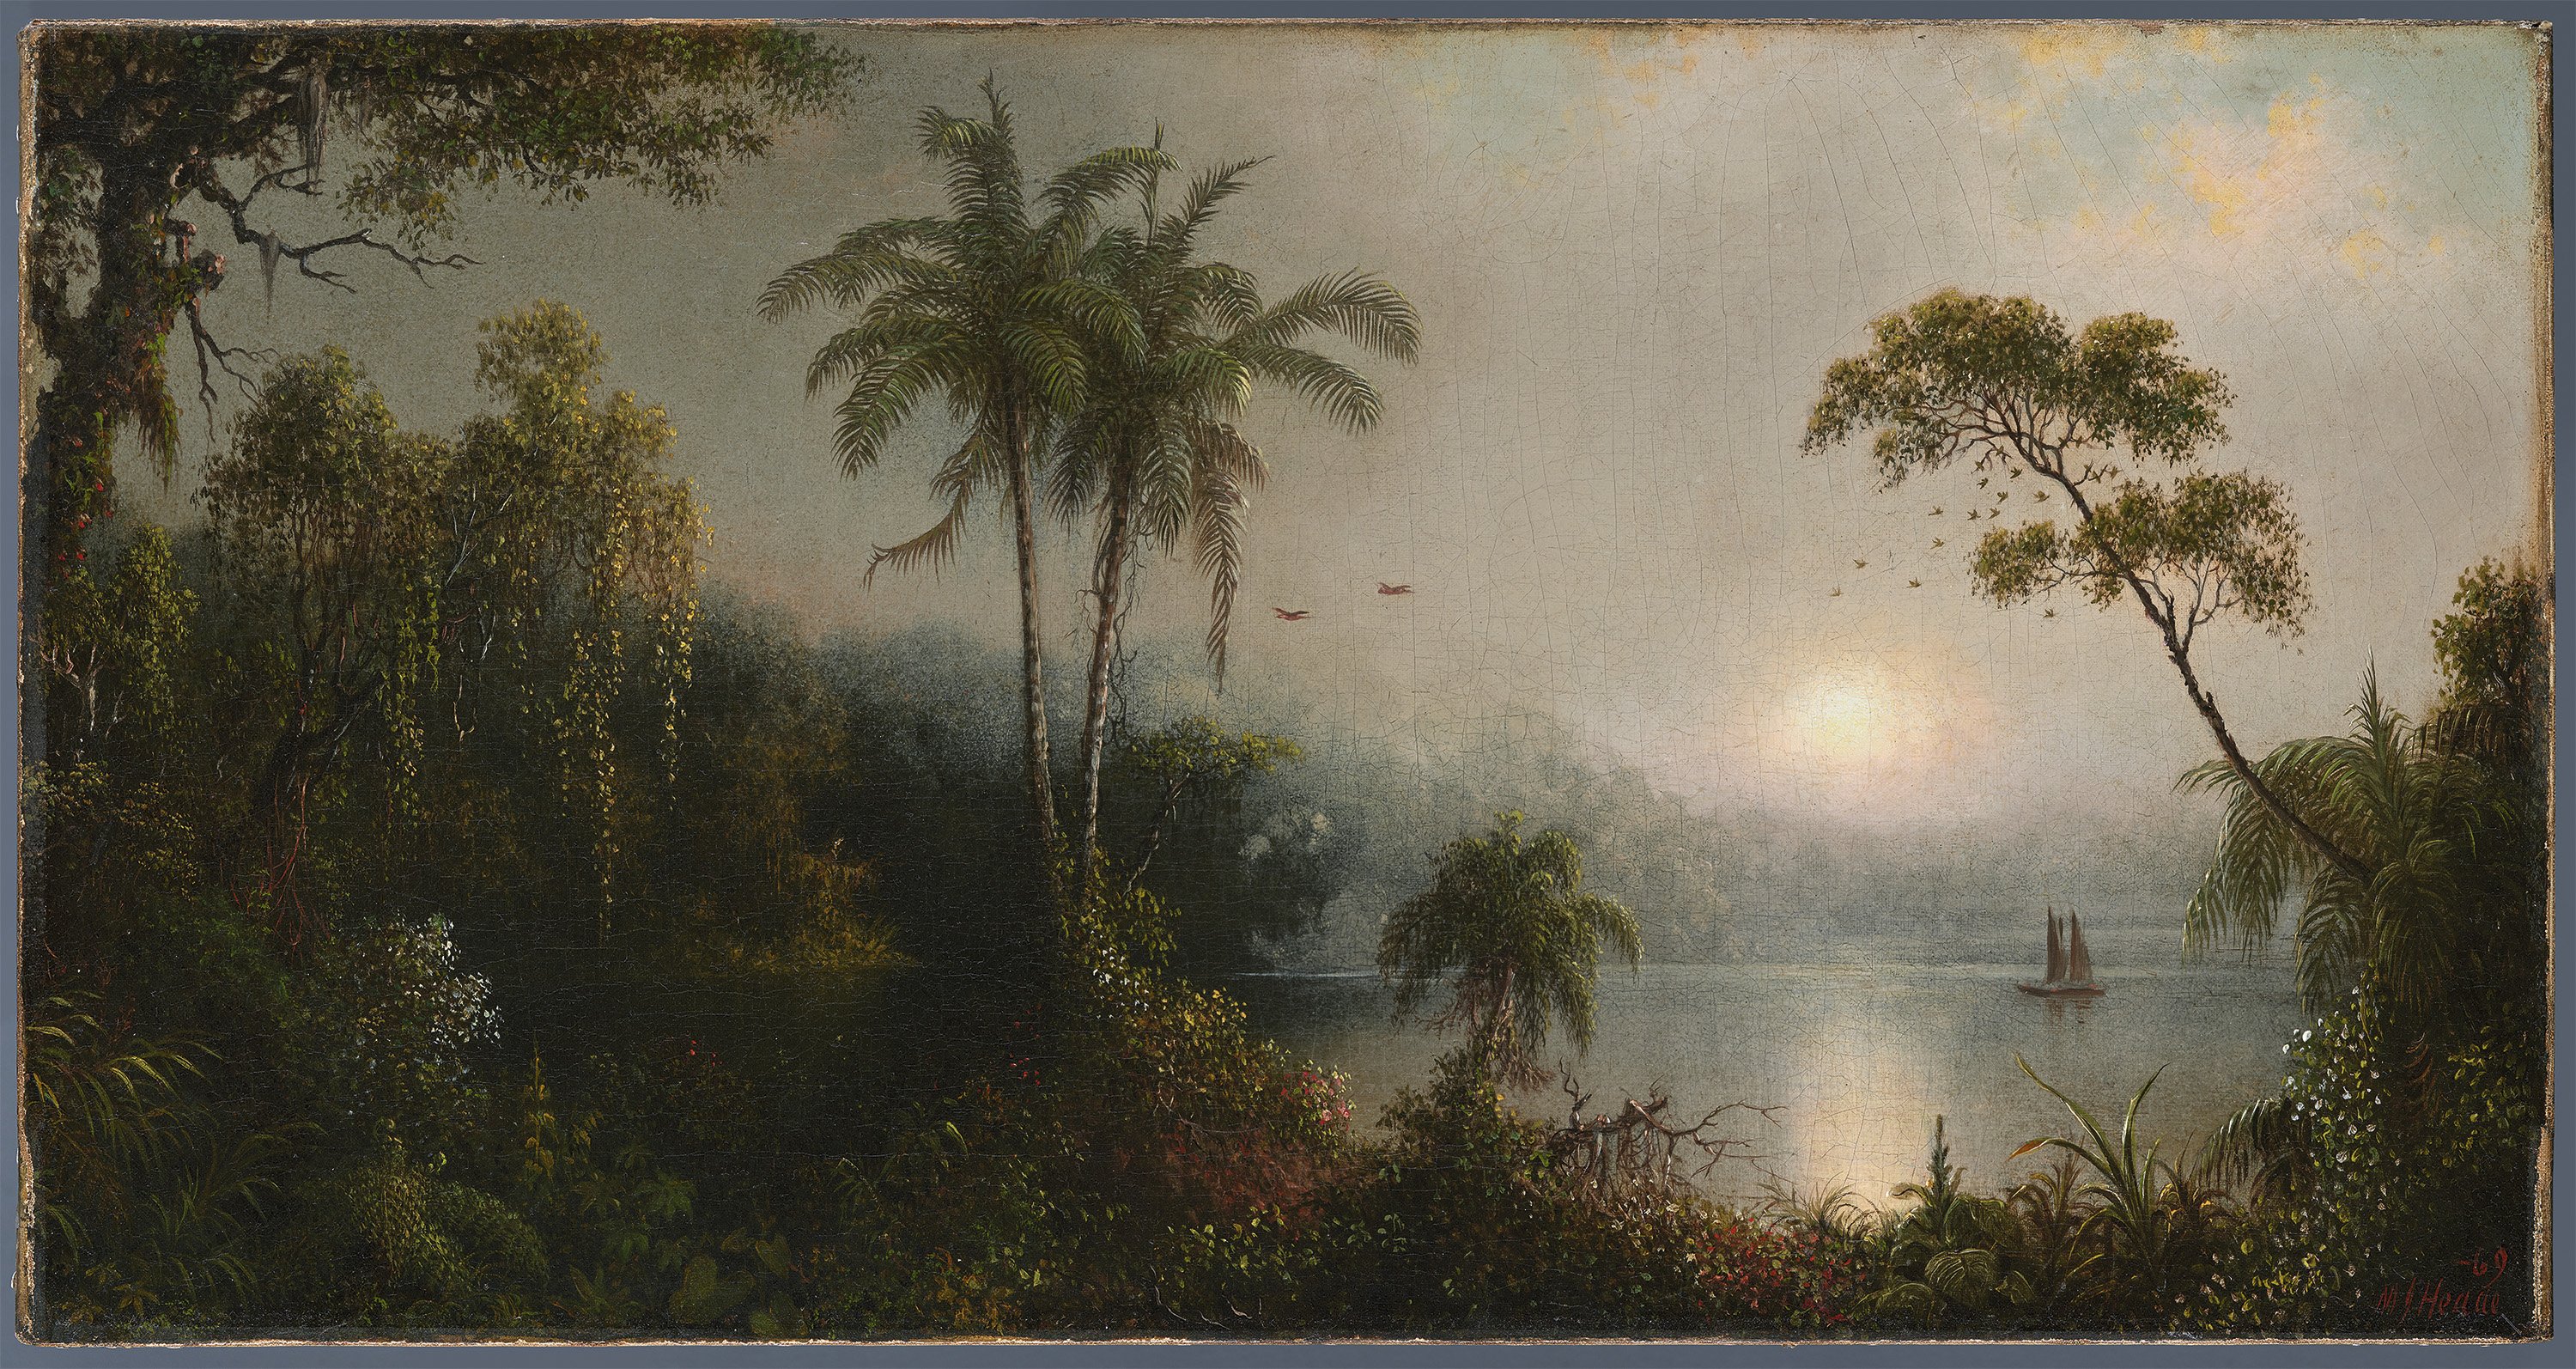 Sunrise in Nicaragua. Amanecer en Nicaragua, 1869